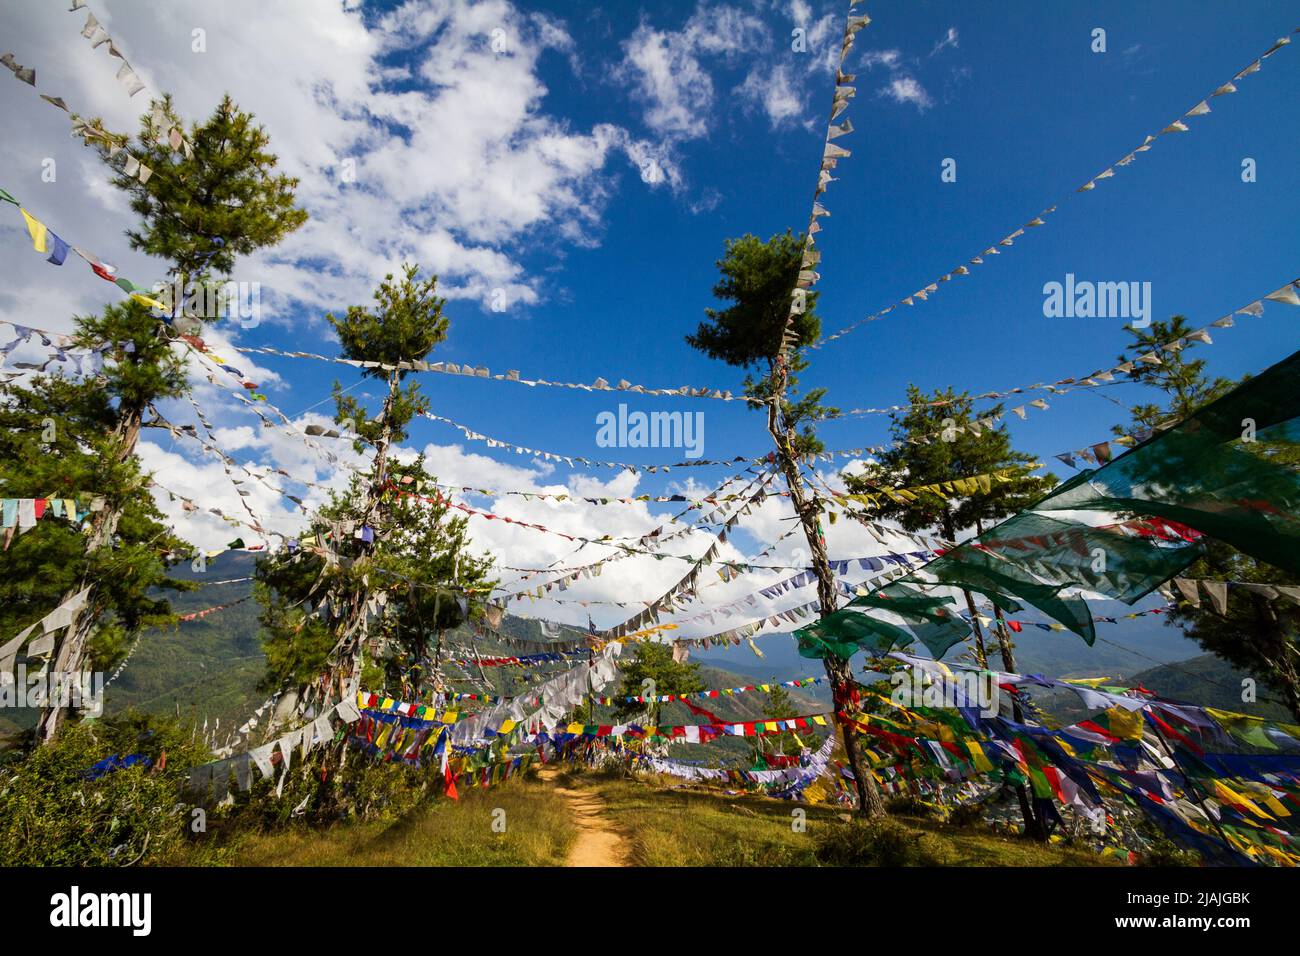 Prayer Flags Fly Between Trees Under A Blue Sky Near Thimphu, Bhutan Stock Photo